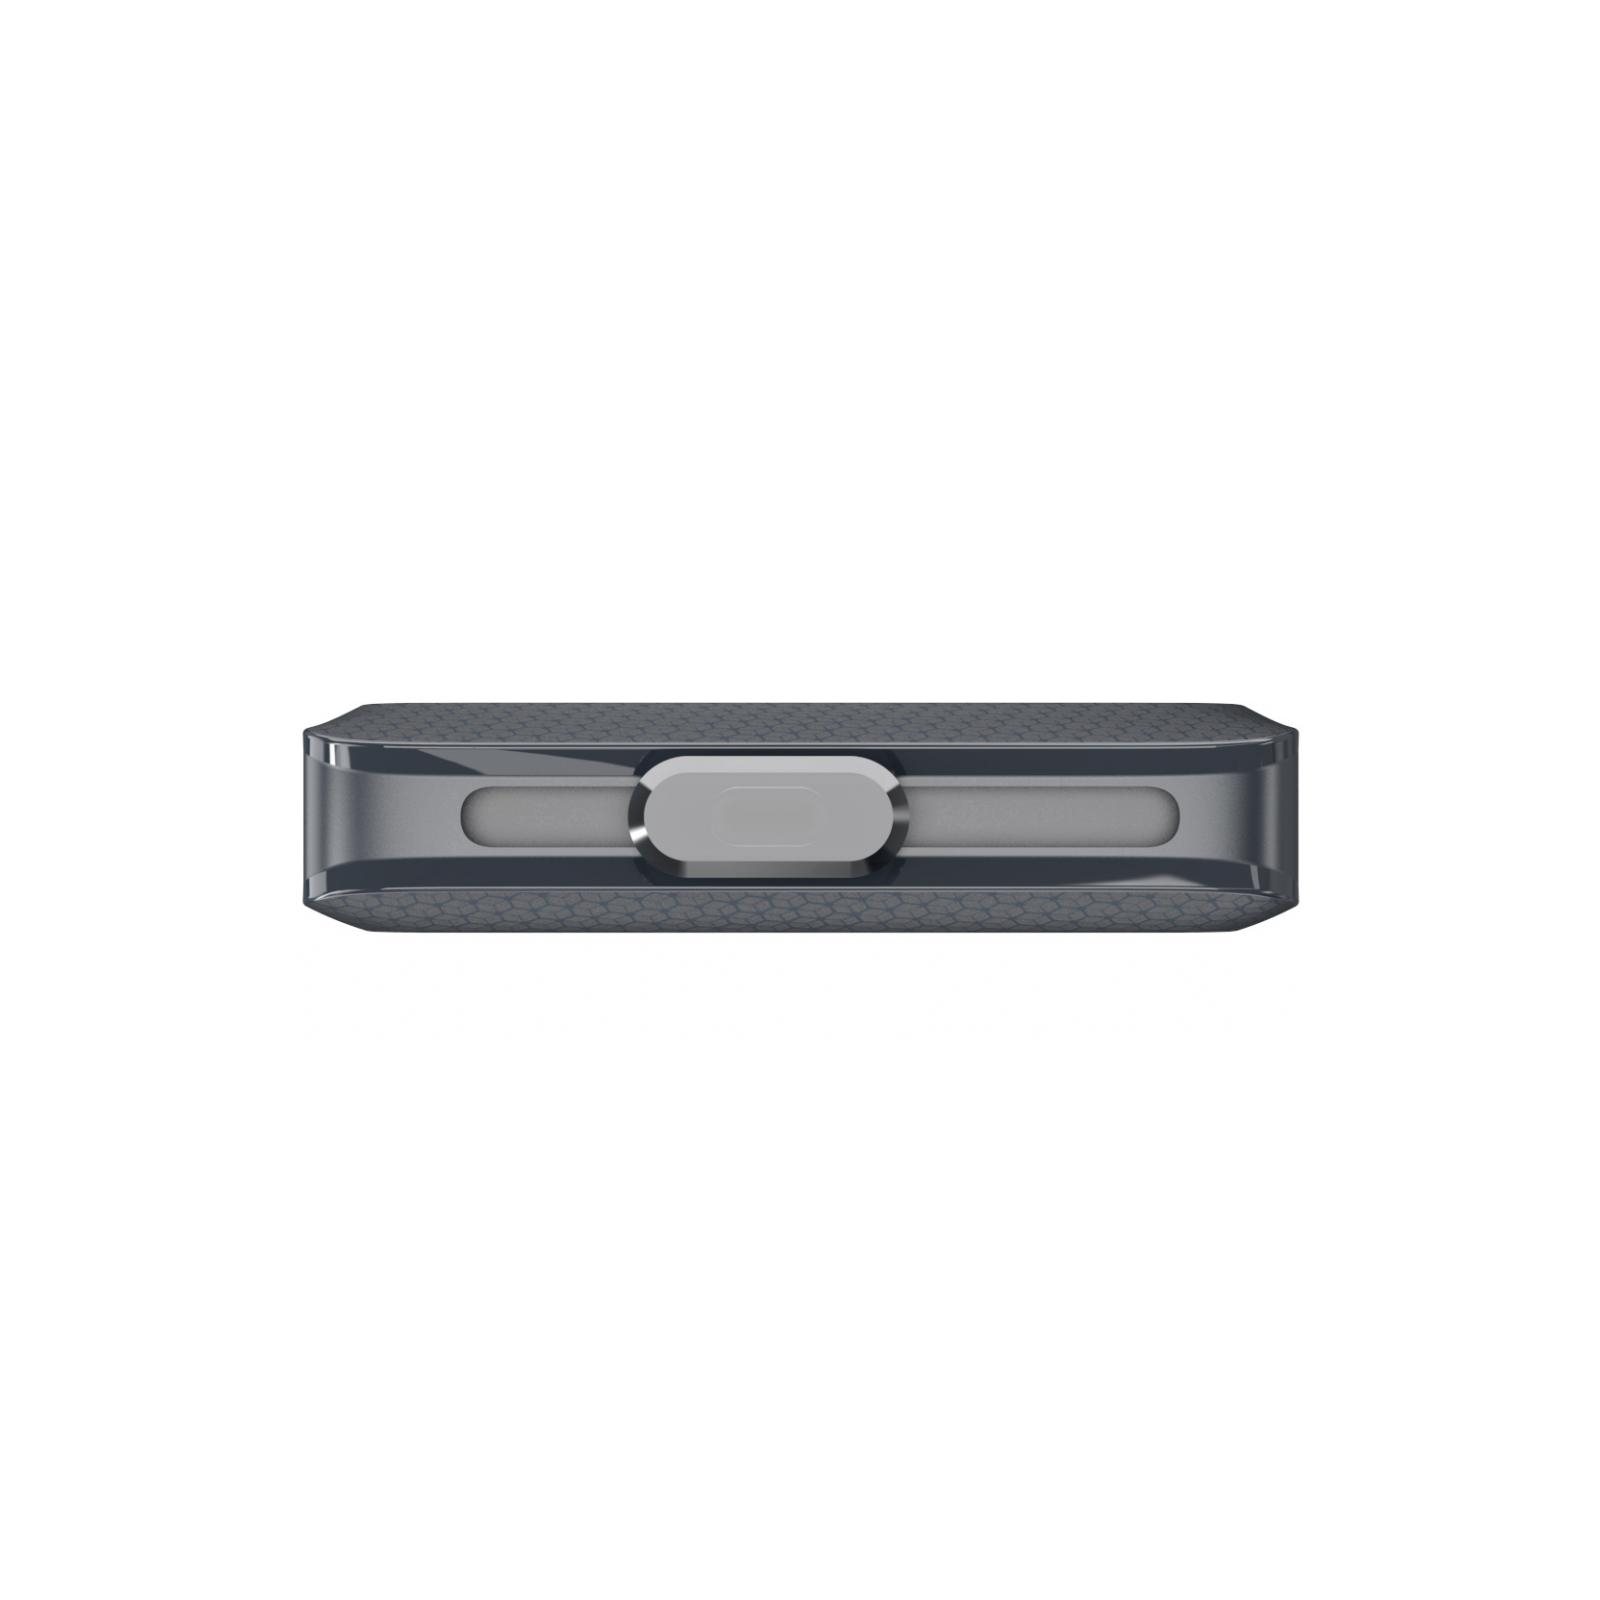 USB флеш накопитель SanDisk 16GB Ultra Dual USB 3.0/Type-C (SDDDC2-016G-G46) изображение 7